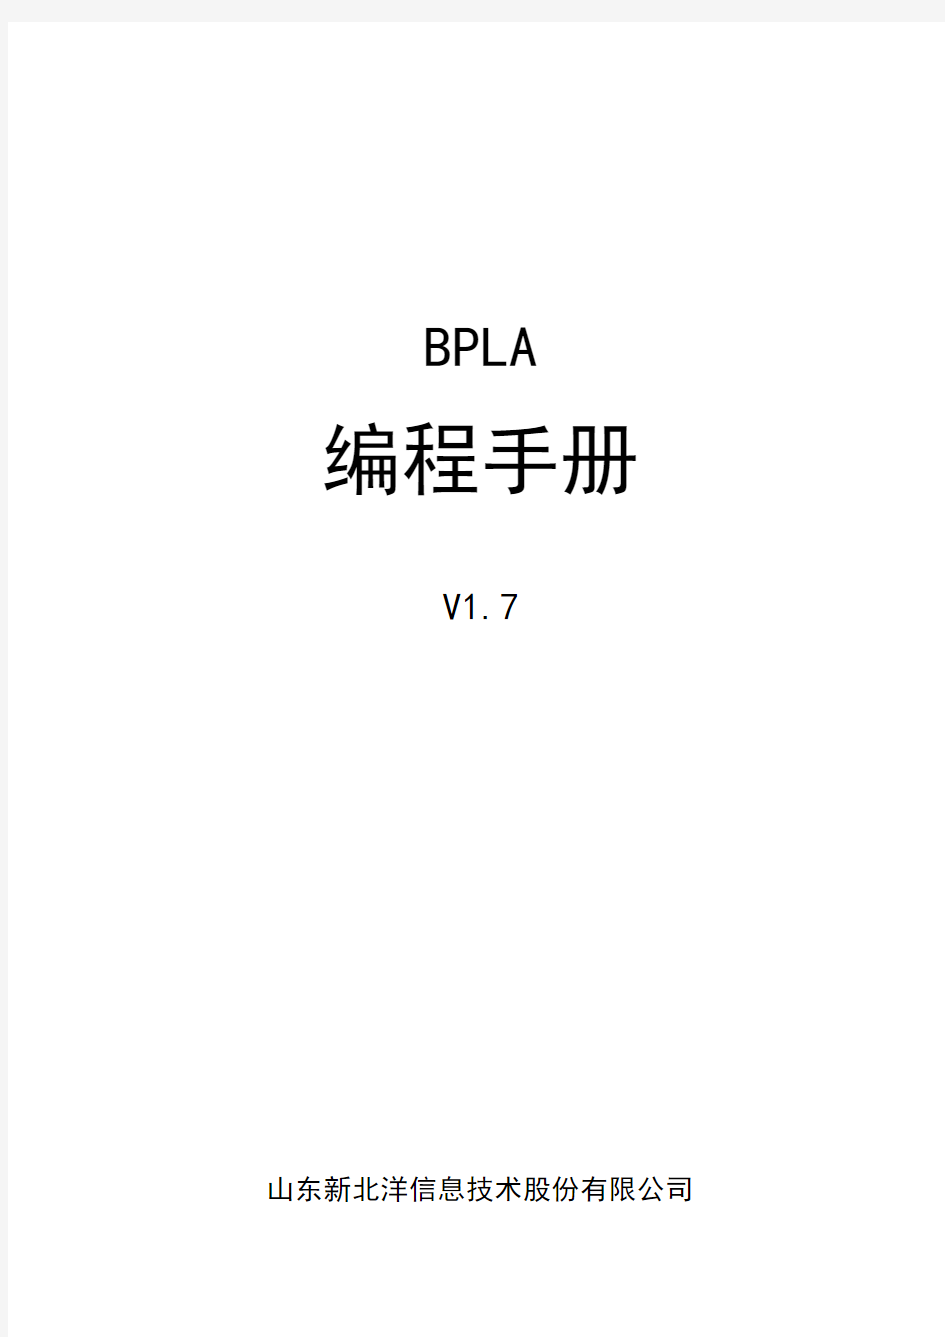 BPLA编程手册V1.7